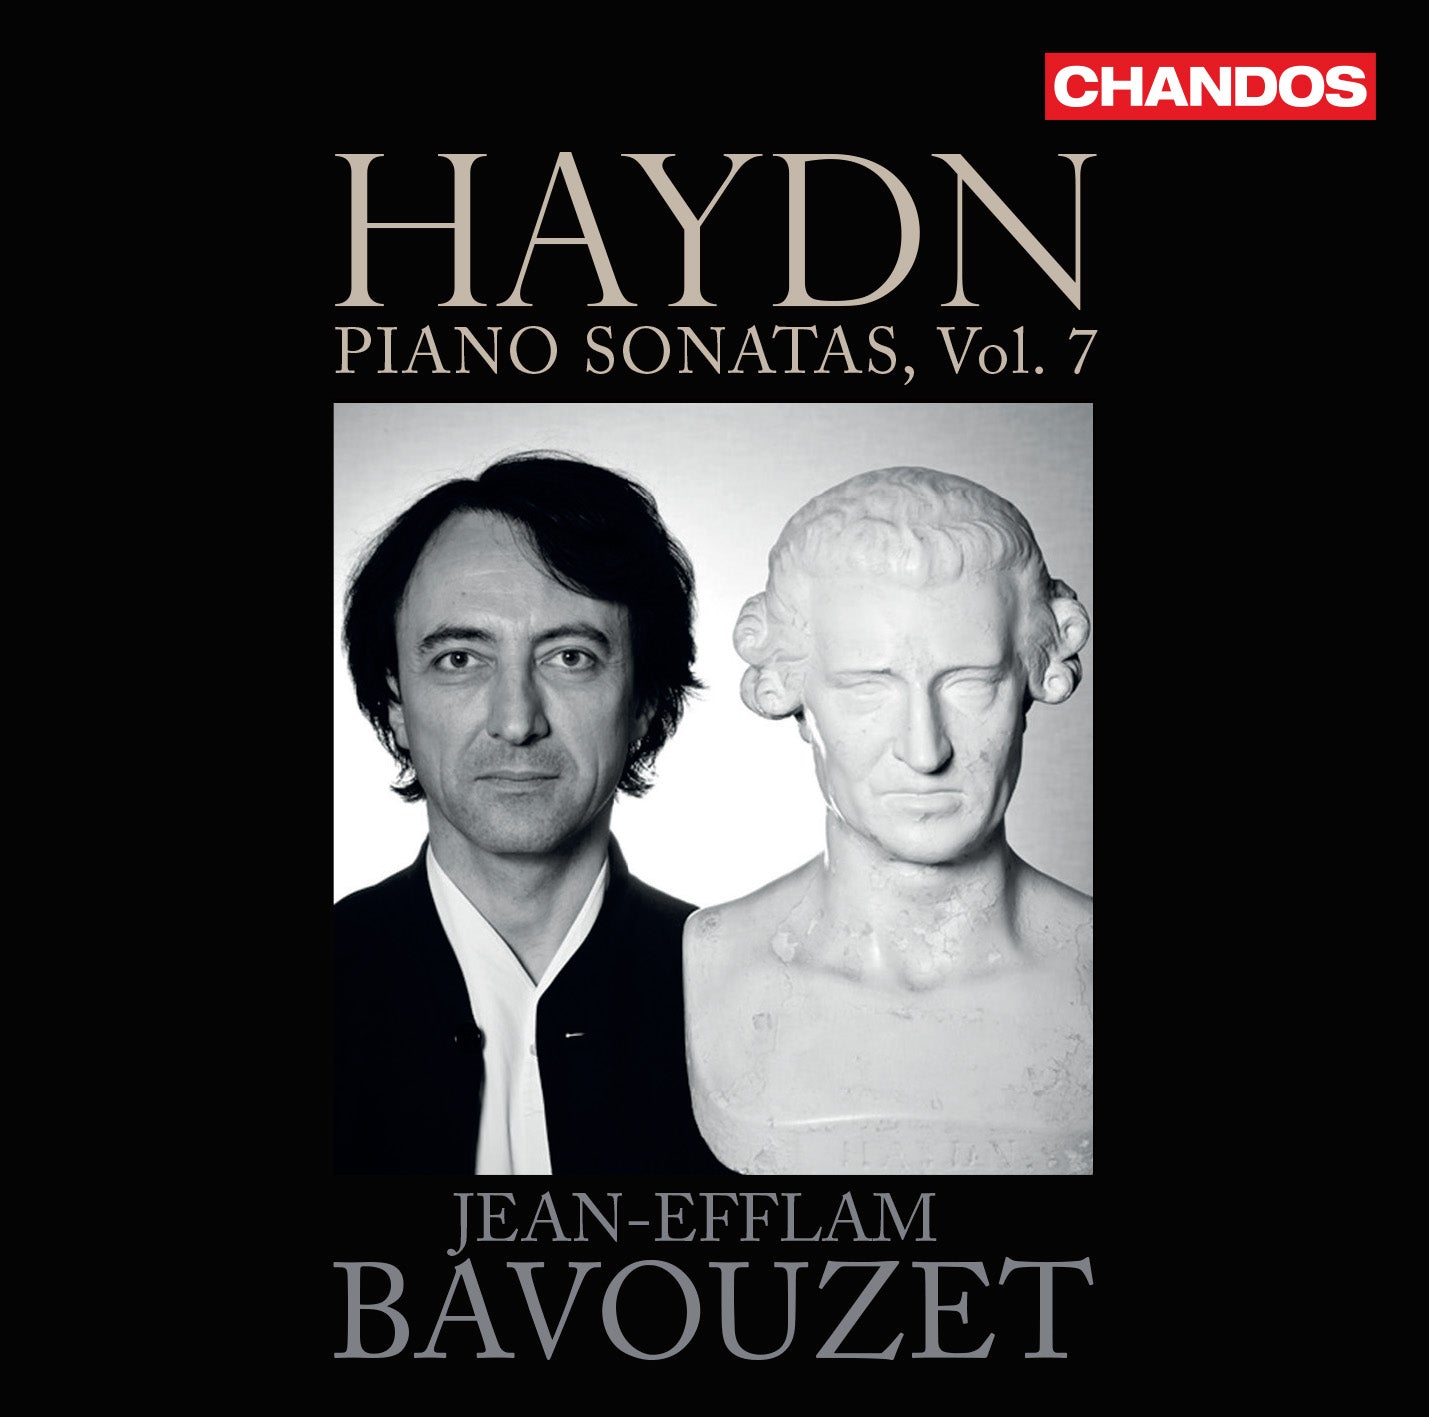 Haydn: The Complete Piano Sonatas, Vol. 7 / Bavouzet